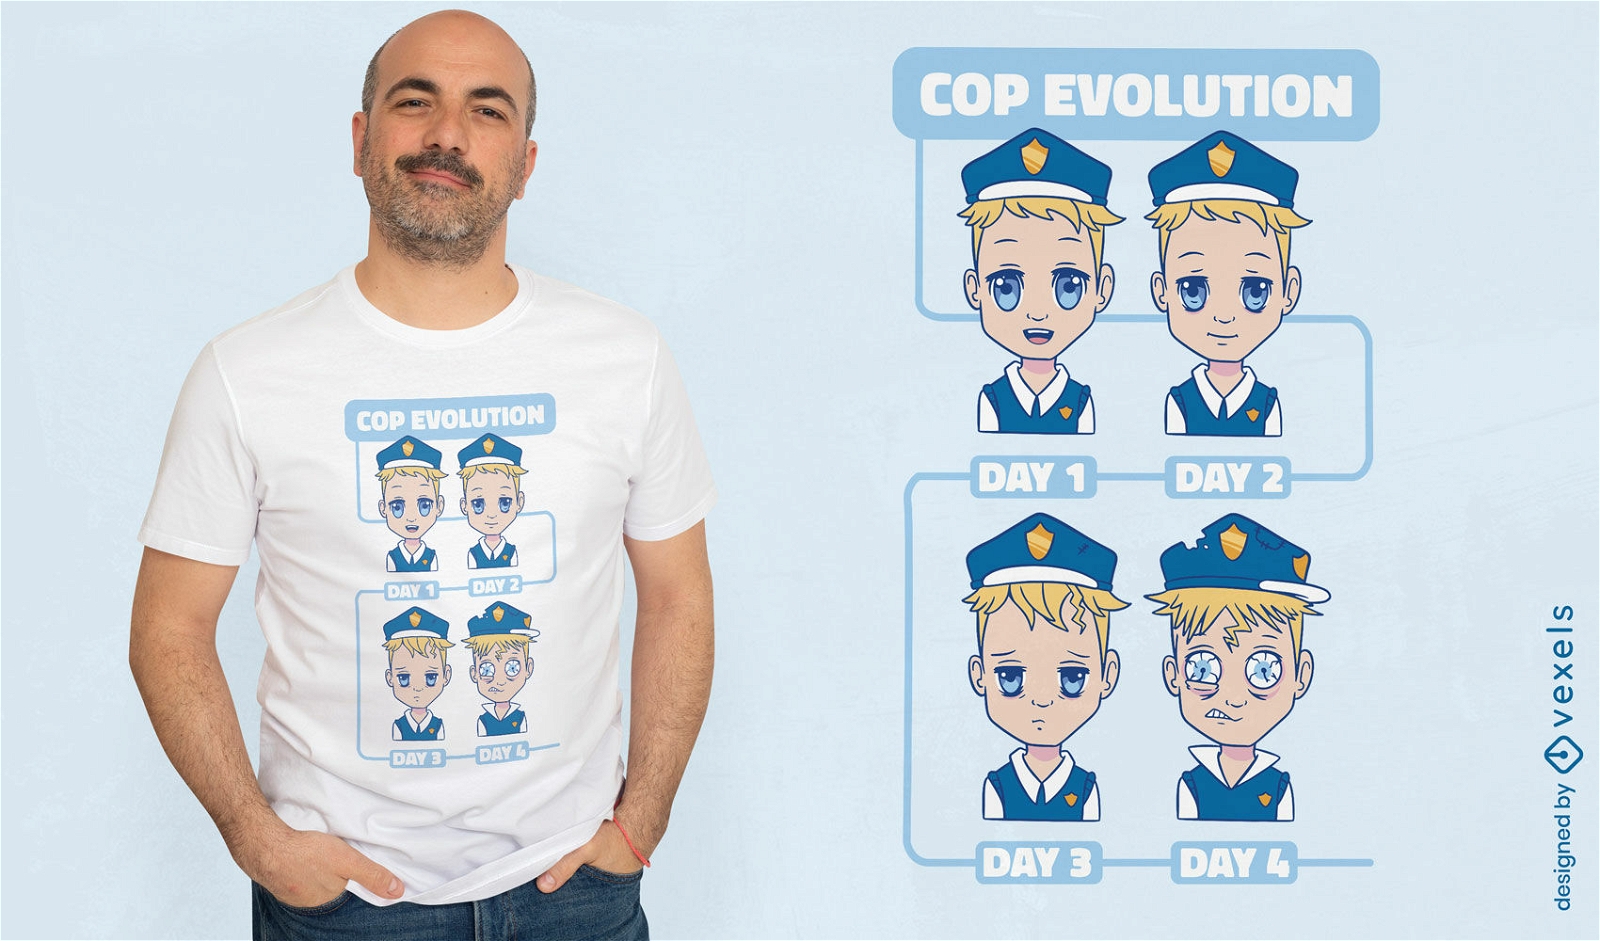 Cop evolution t-shirt design